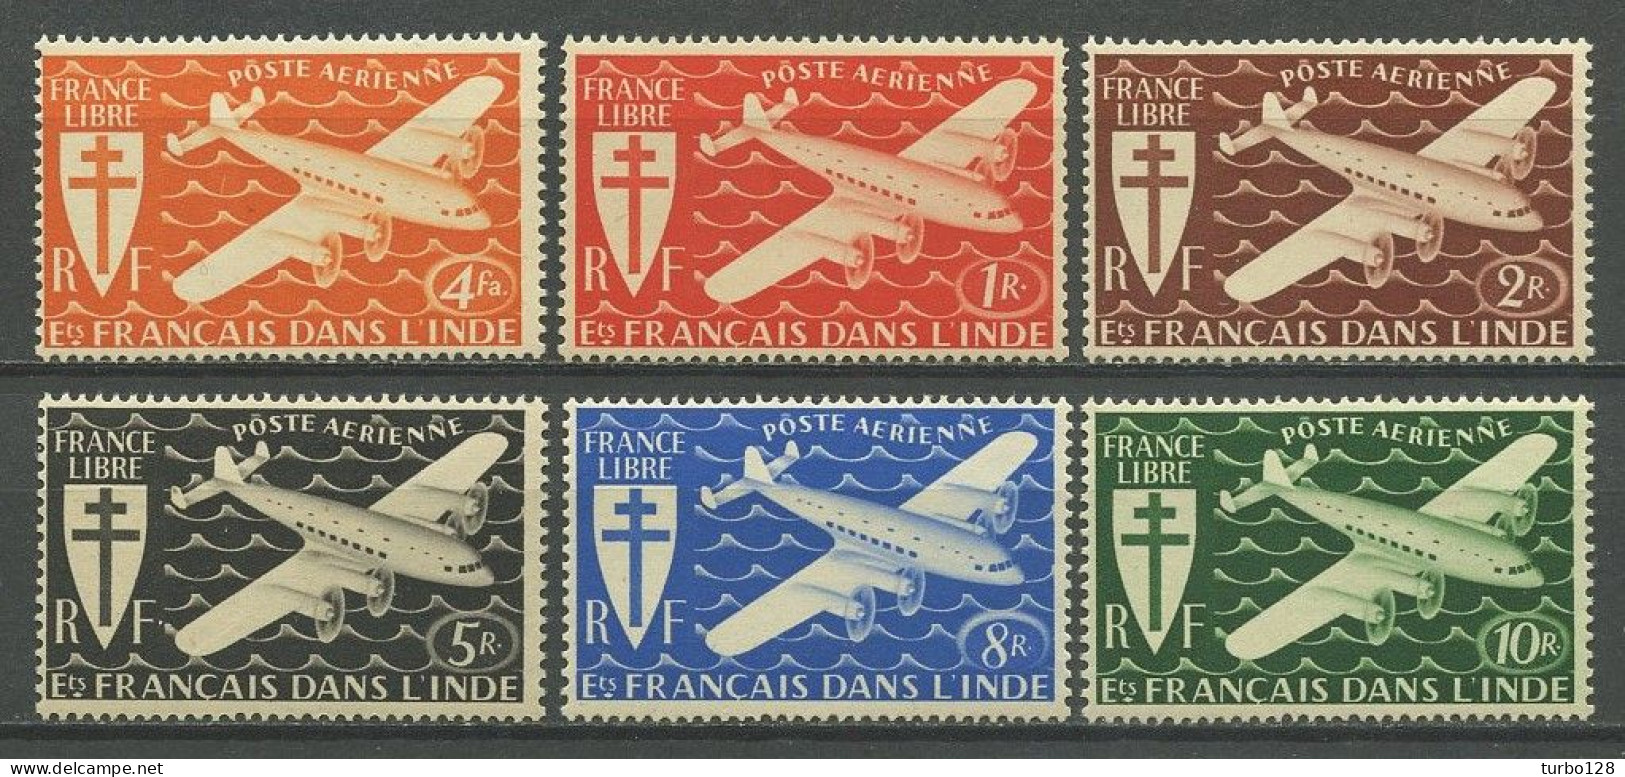 INDE 1942 PA N° 1/6 ** Neufs MNH Superbes C 16 € Série De Londres Avion Plane Transports - Unused Stamps